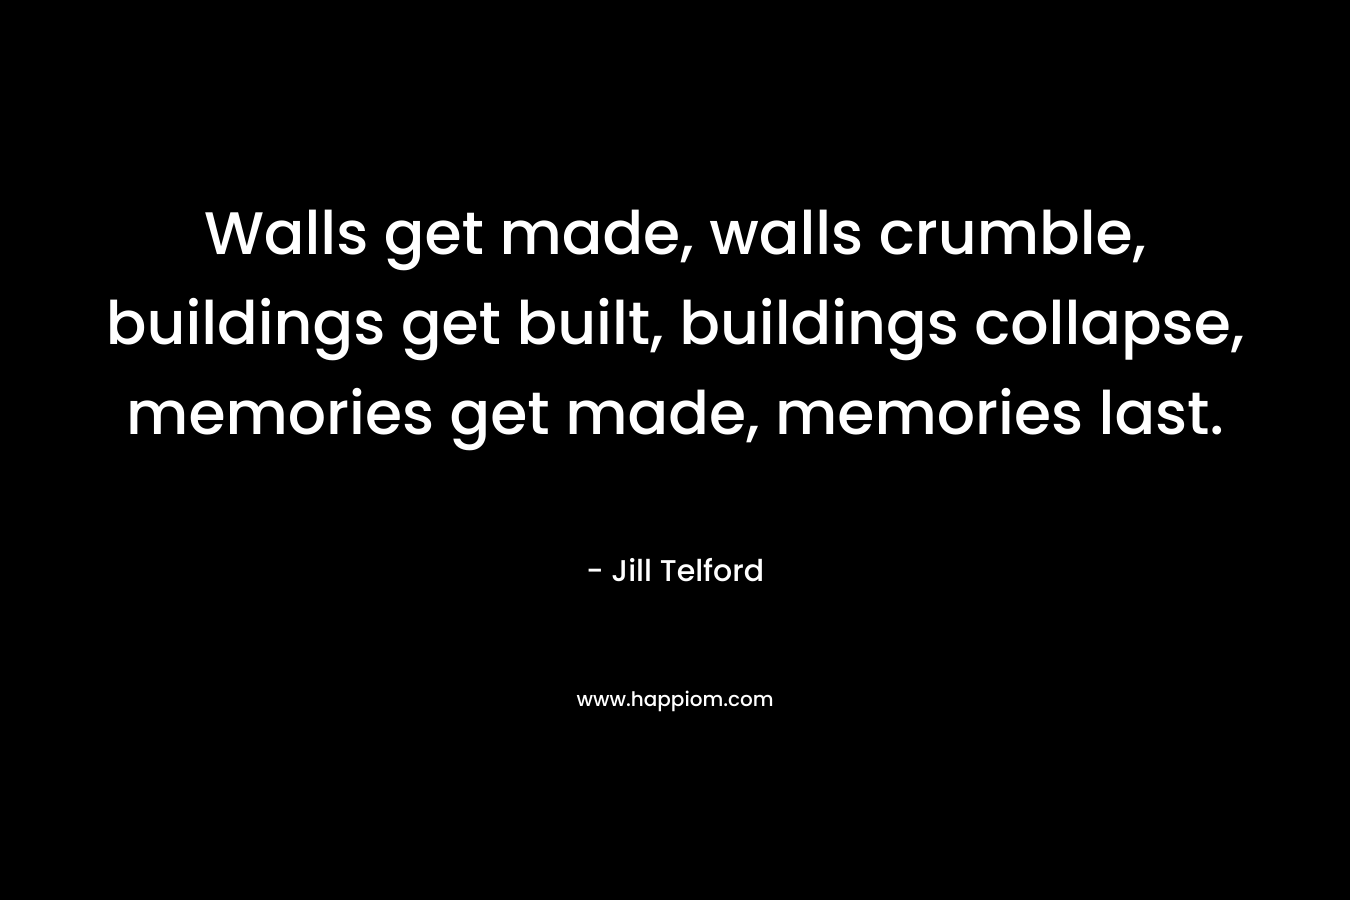 Walls get made, walls crumble, buildings get built, buildings collapse, memories get made, memories last.